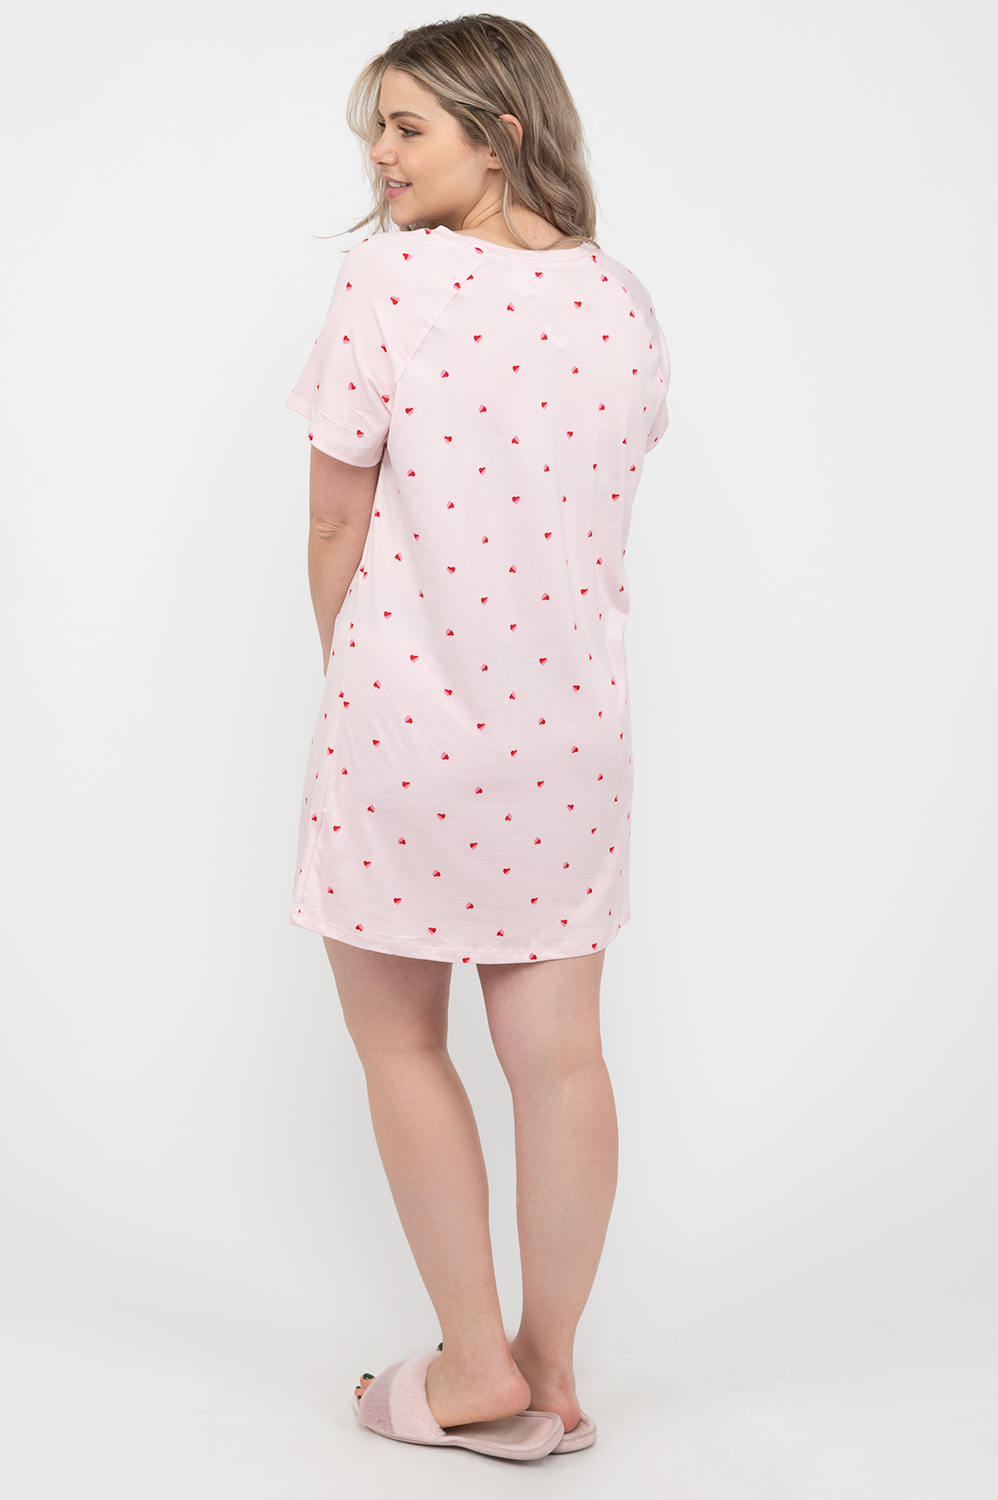 Dreams & Co. Women's Plus Size Short-sleeve Sleepshirt - 3x/4x